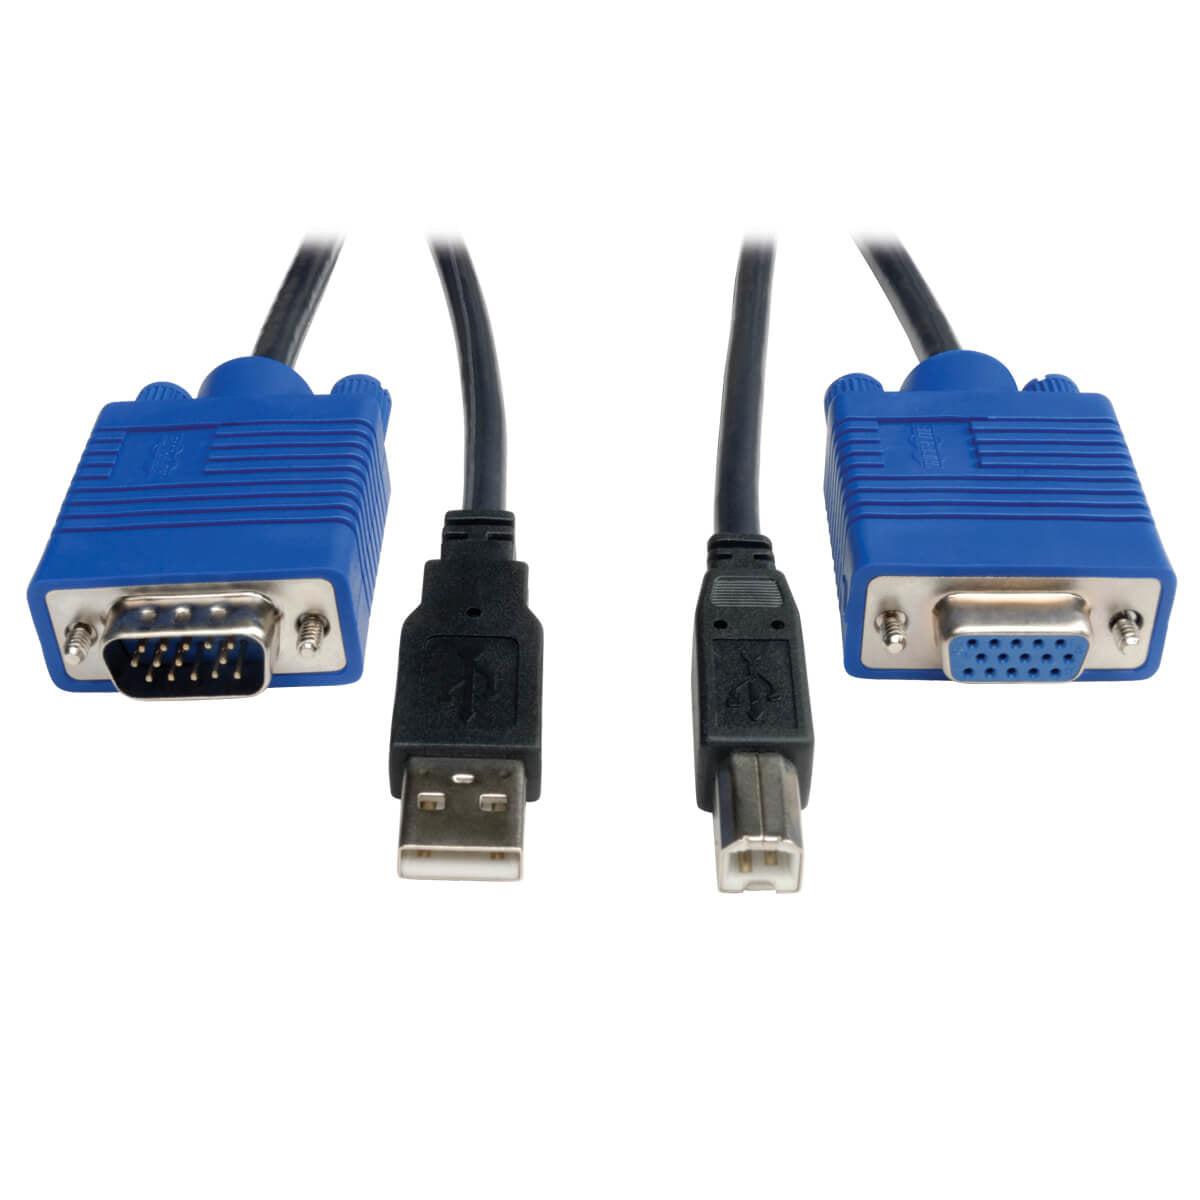 Tripp Lite P758-006 Usb Cable Kit For Kvm Switch B006-Vu4-R, 6 Ft. (1.83 M)